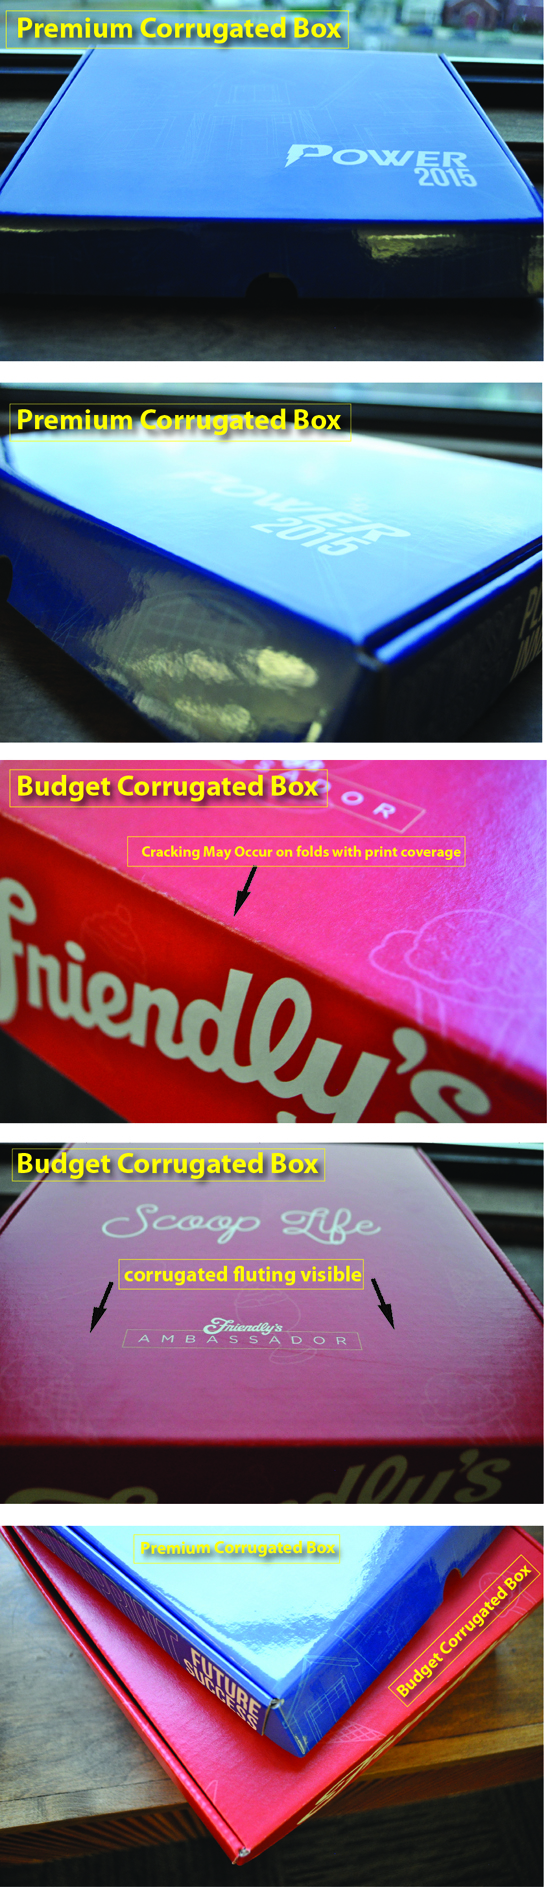 Premium vs Budget Corrugated boxes